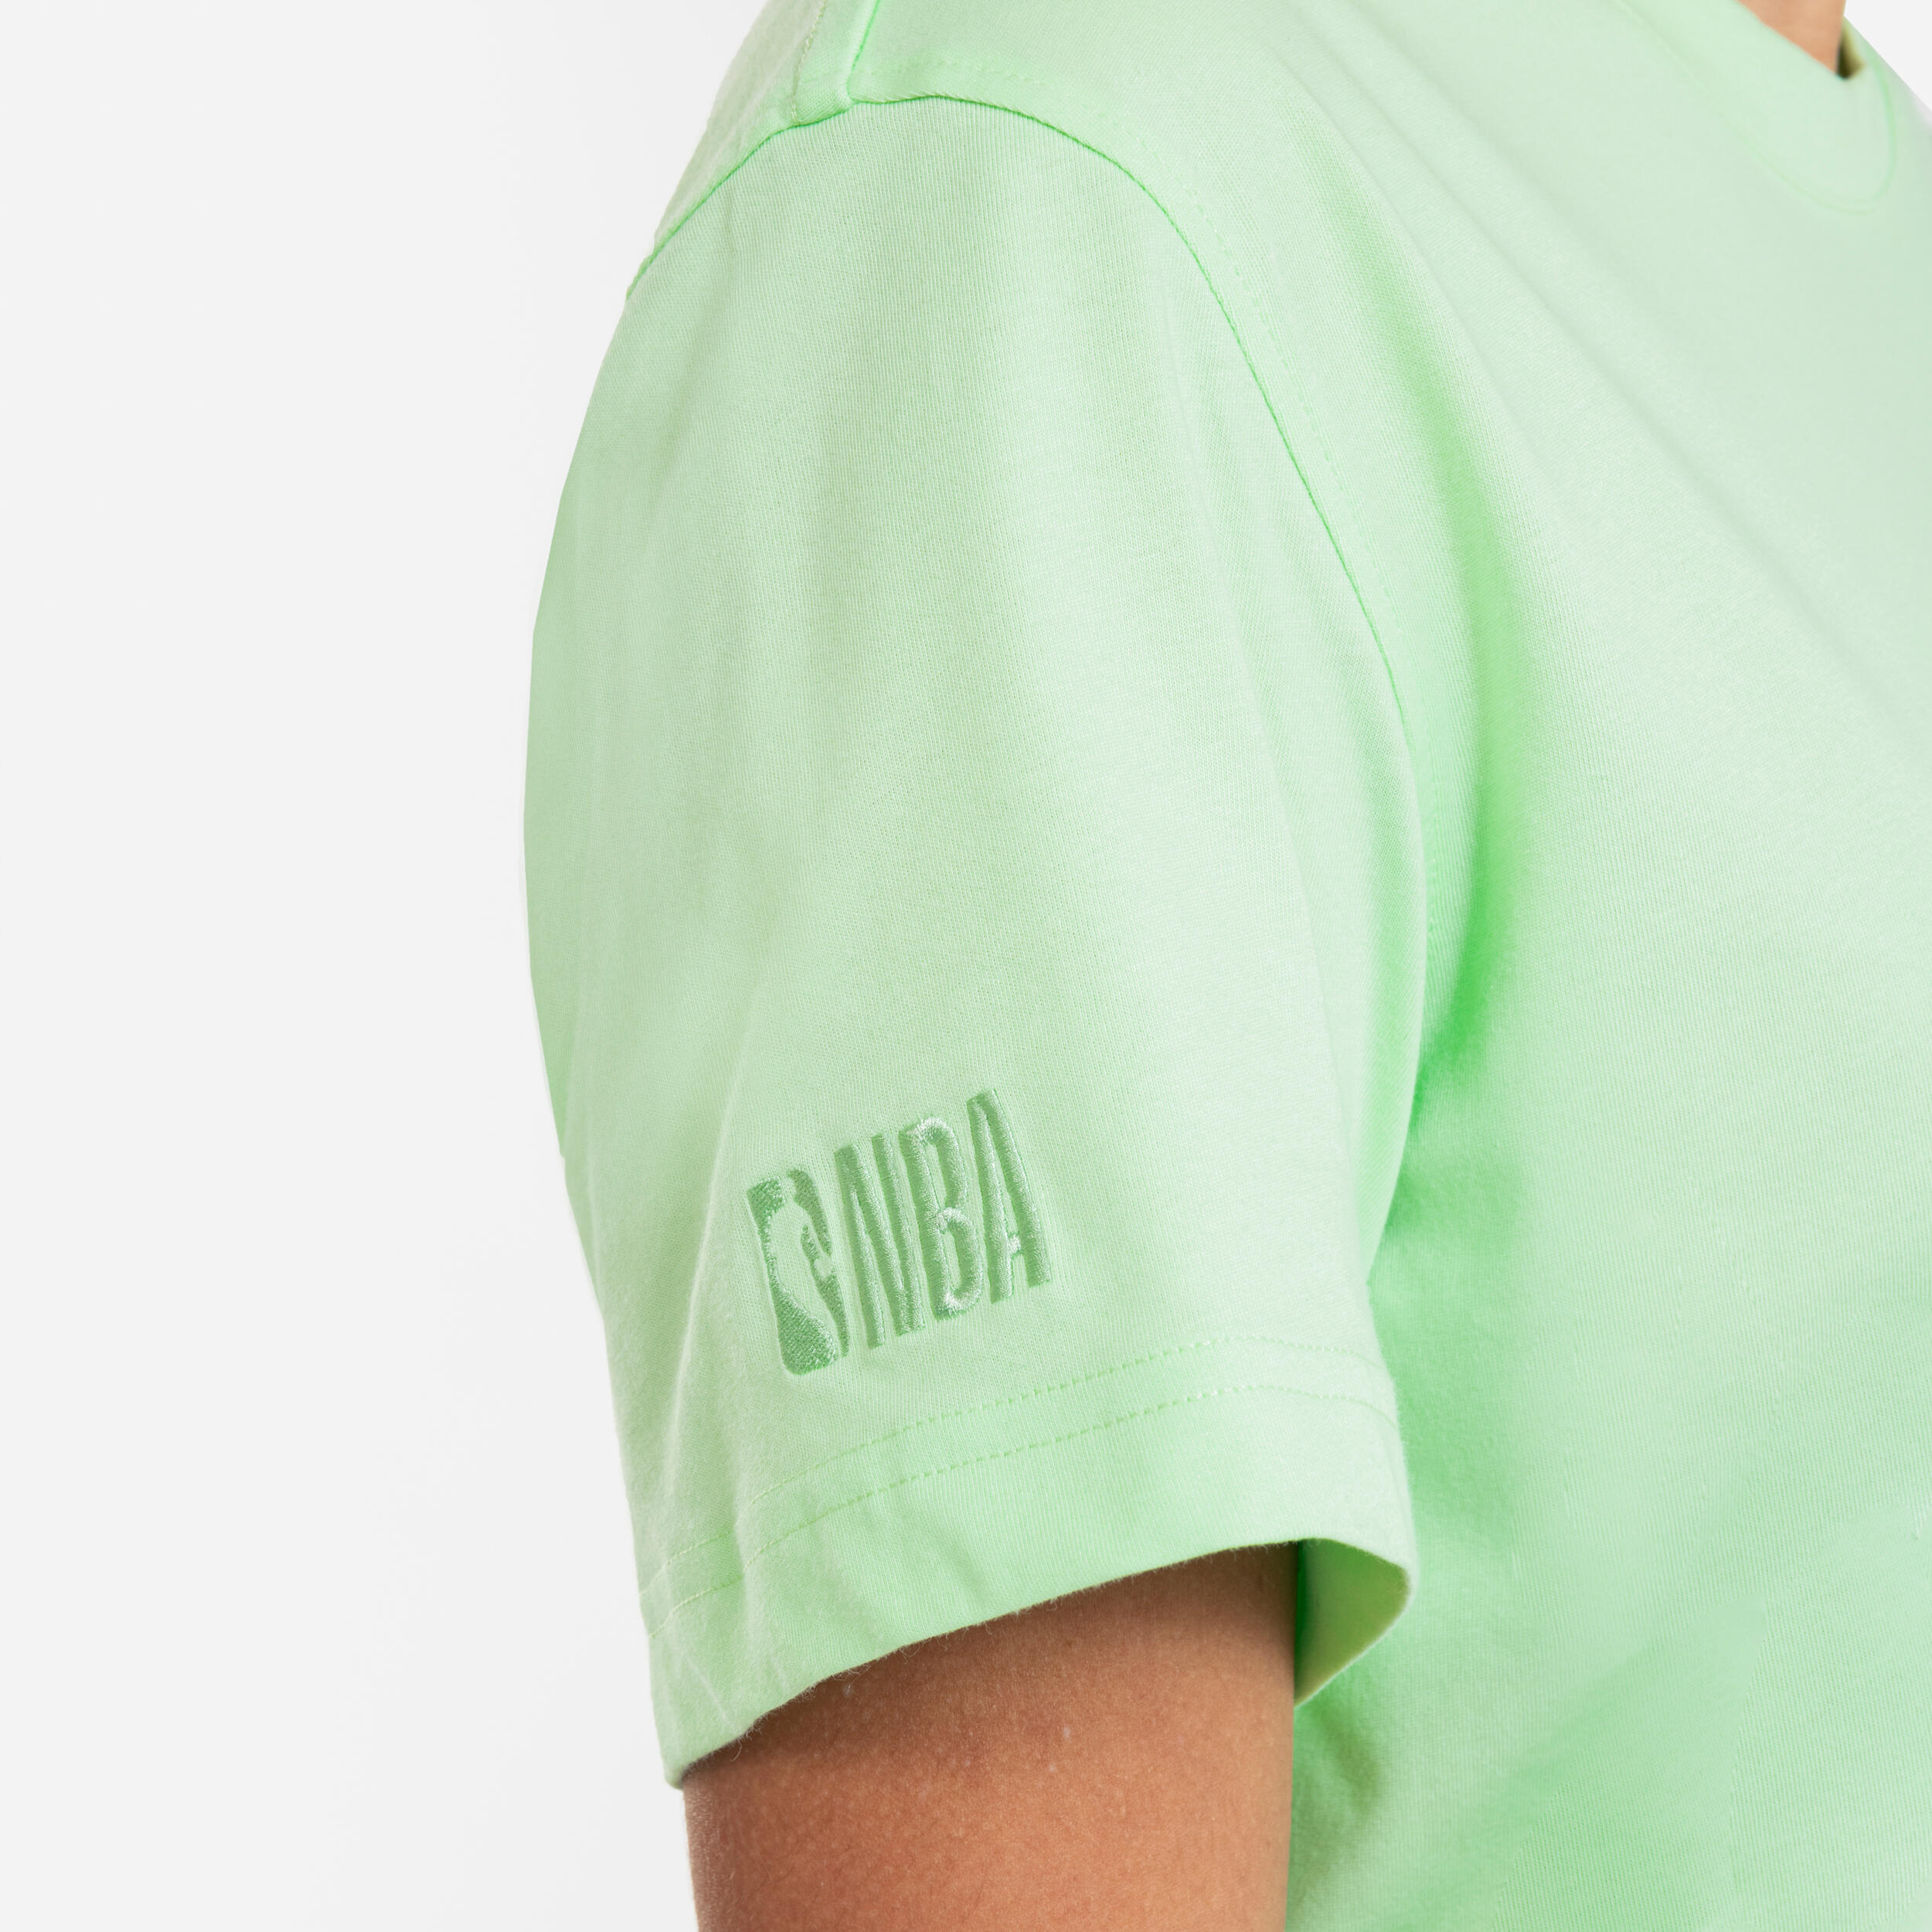 Unisex Basketball T-Shirt 900 AD - NBA Celtics/Green 7/8